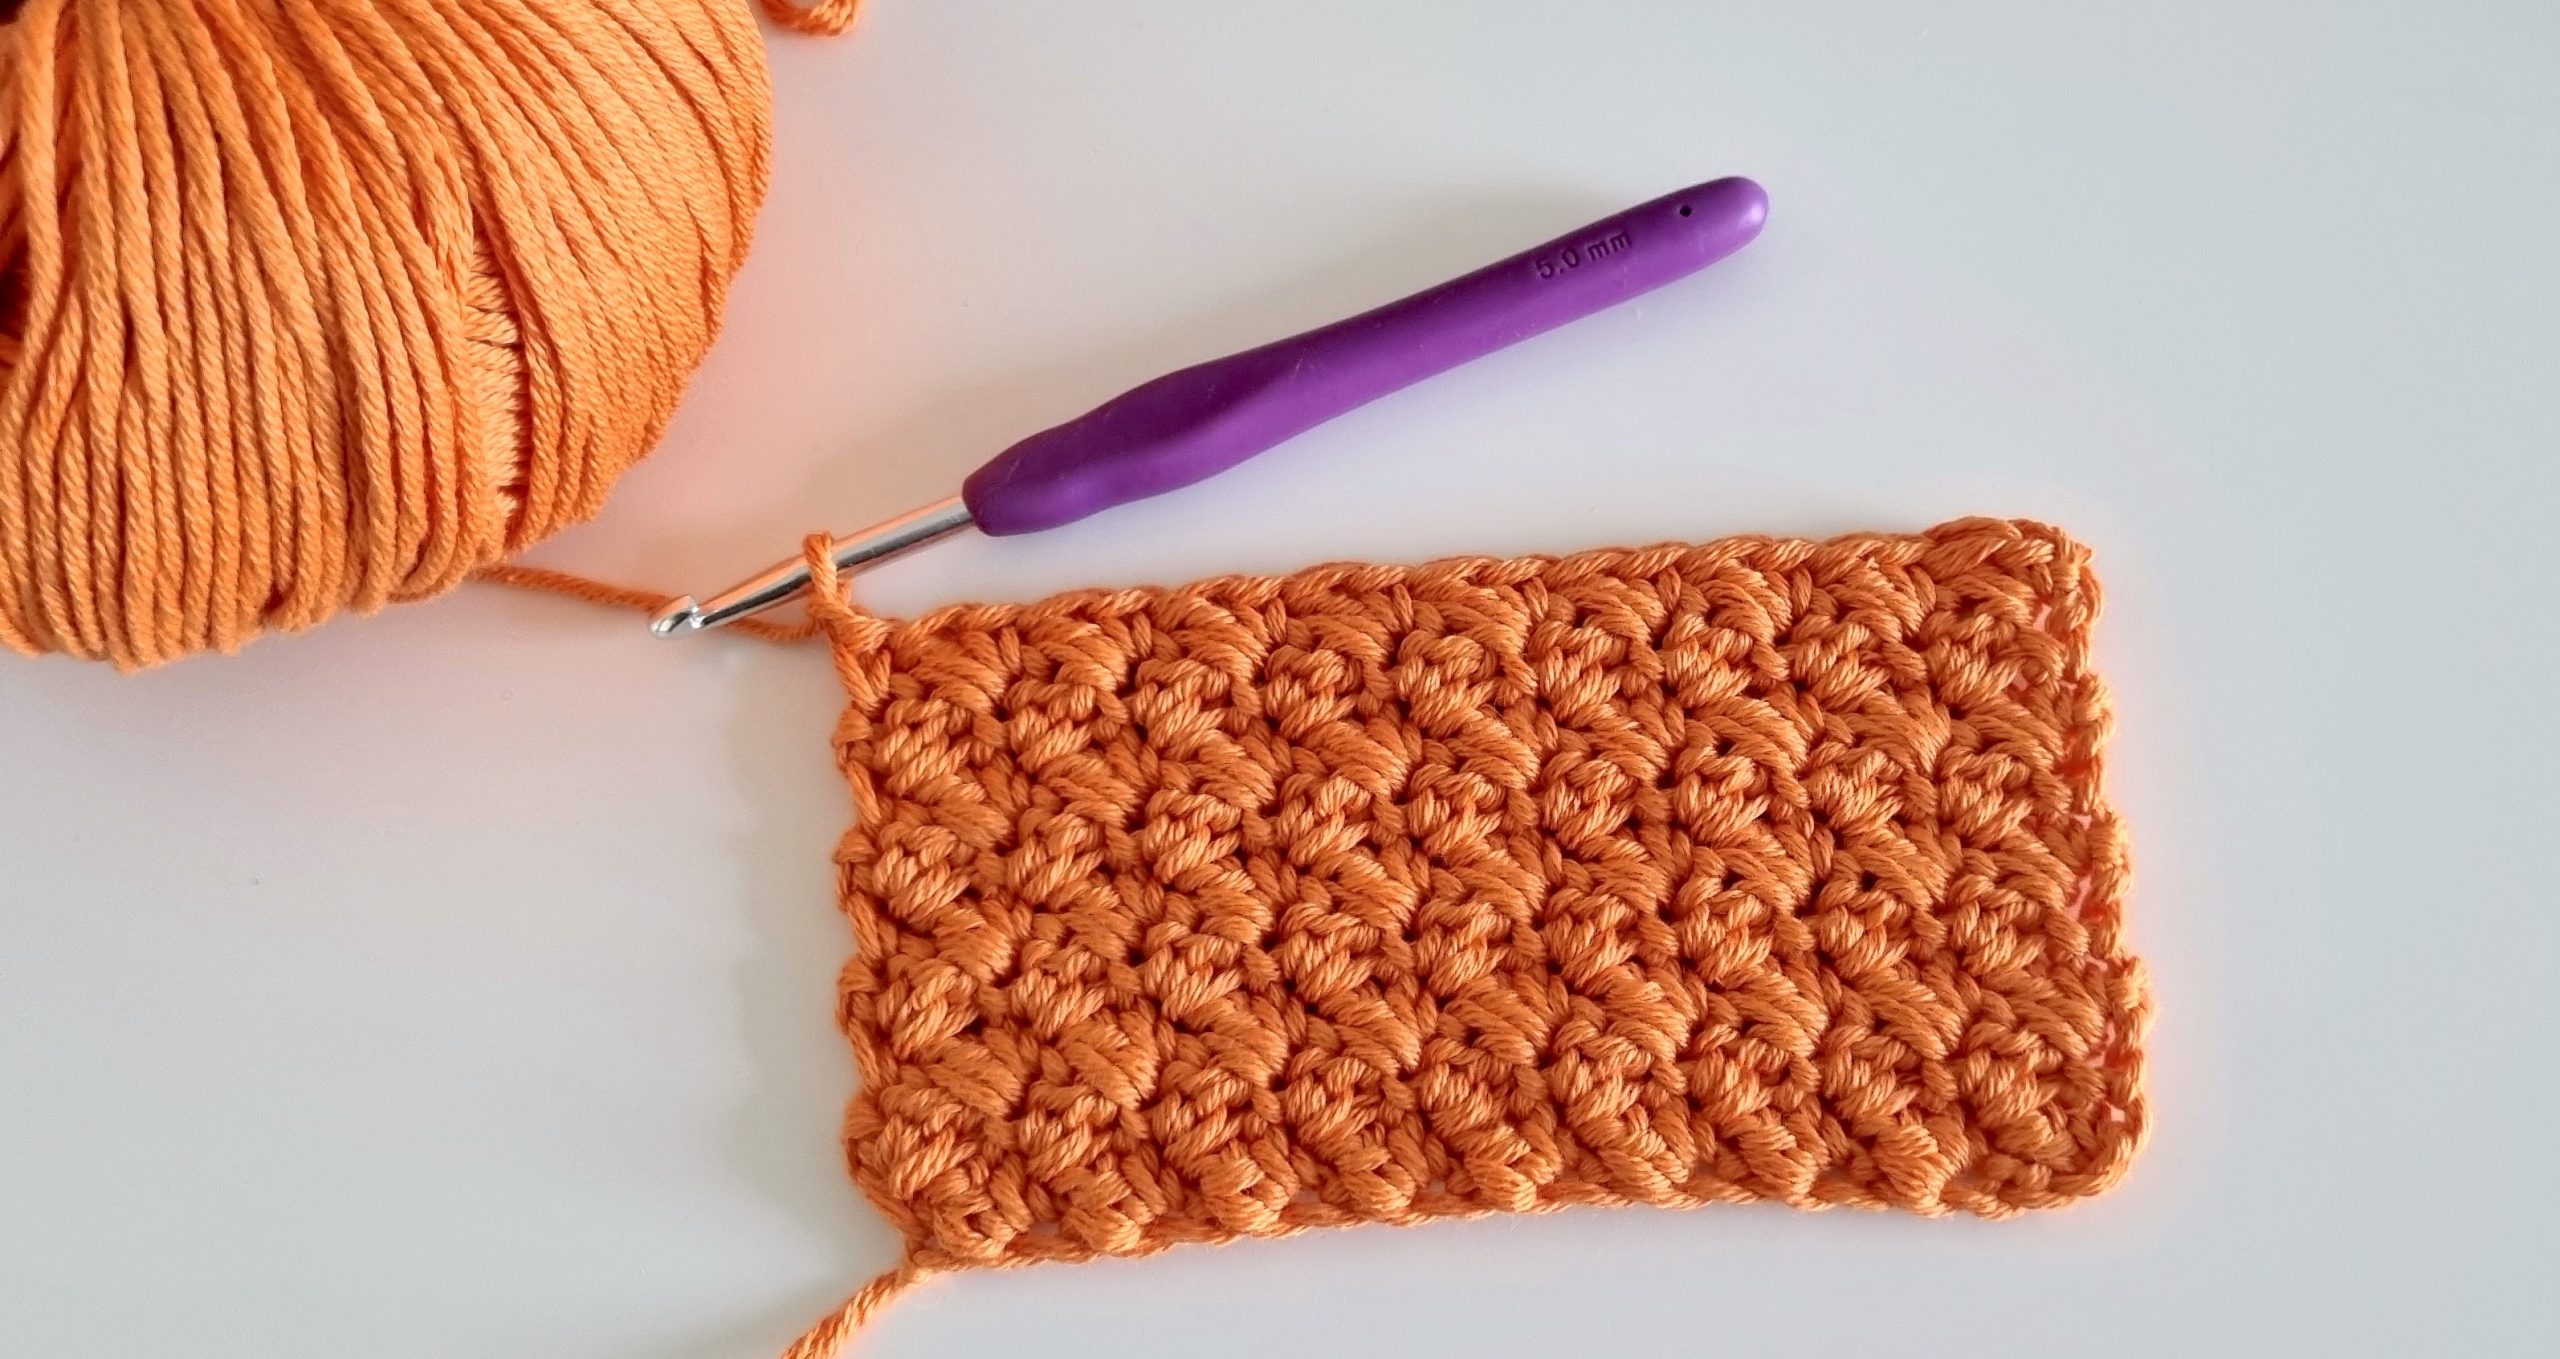 9 Crochet Stitch Patterns For Beginners  Crochet stitches patterns, Crochet  stitches, Crochet stitches video